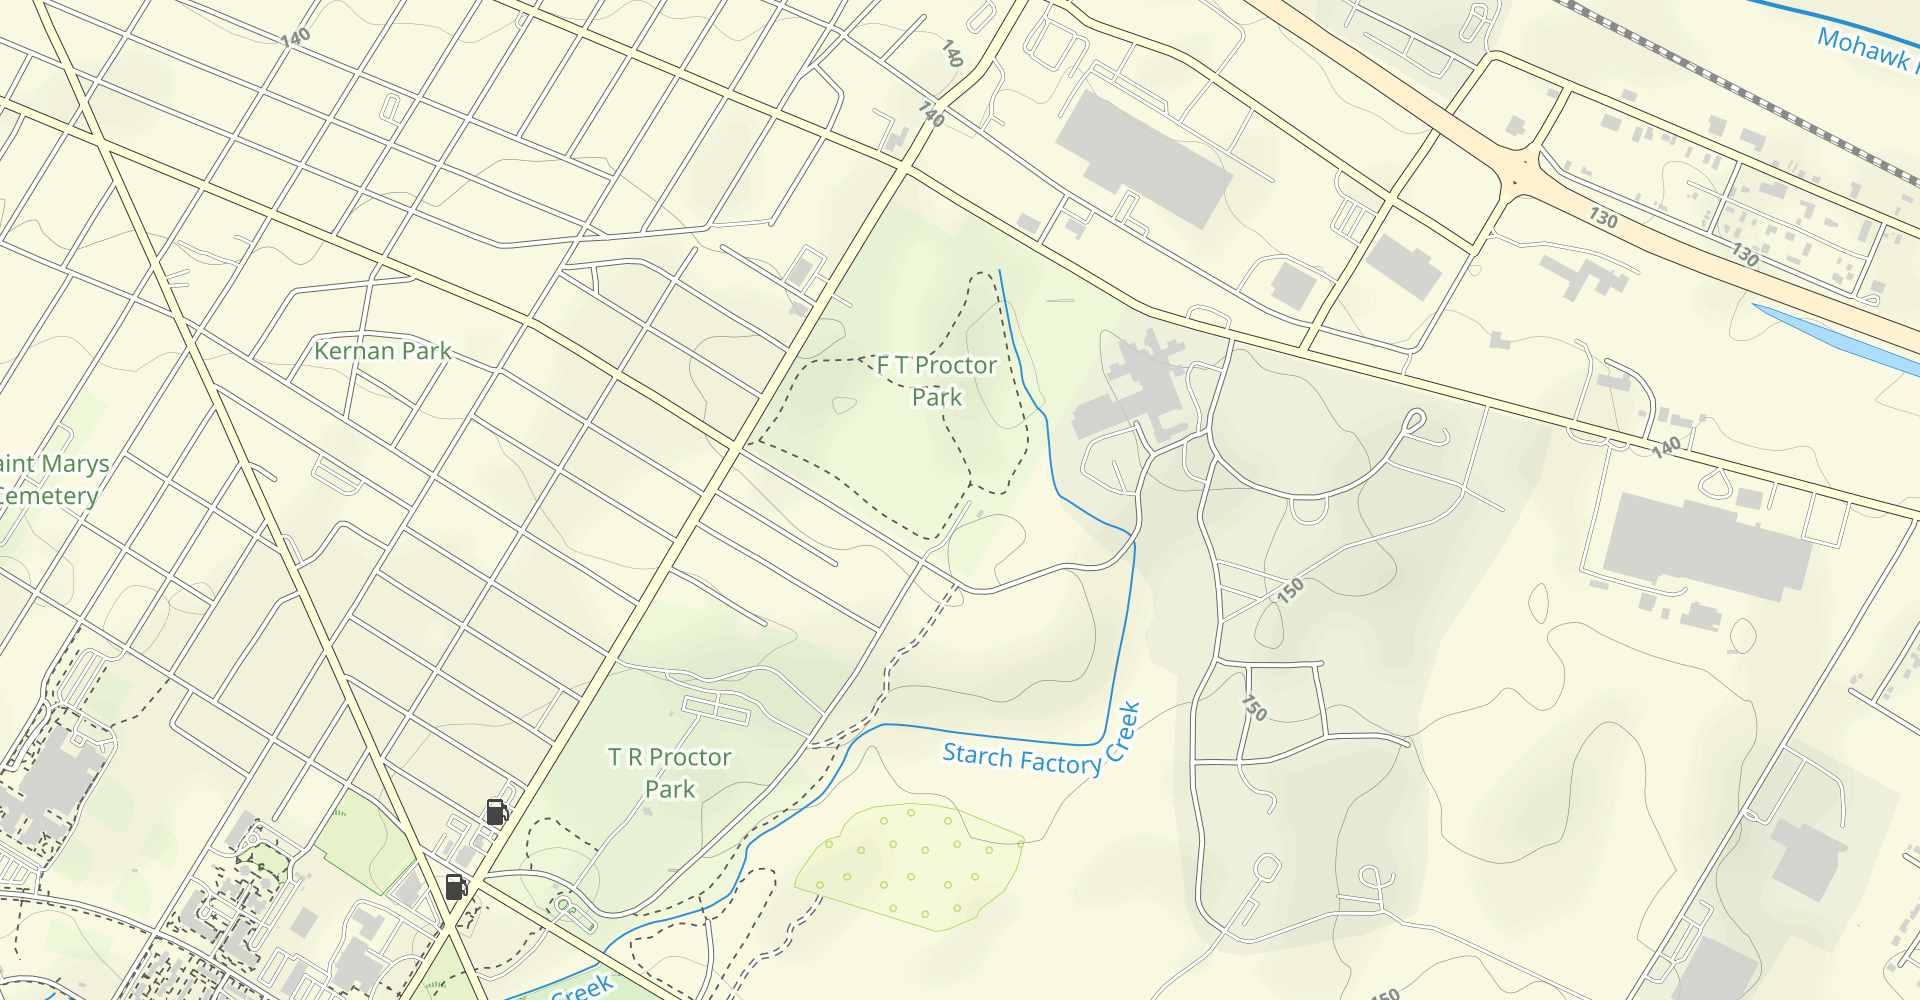 Proctor Park Greater Loop